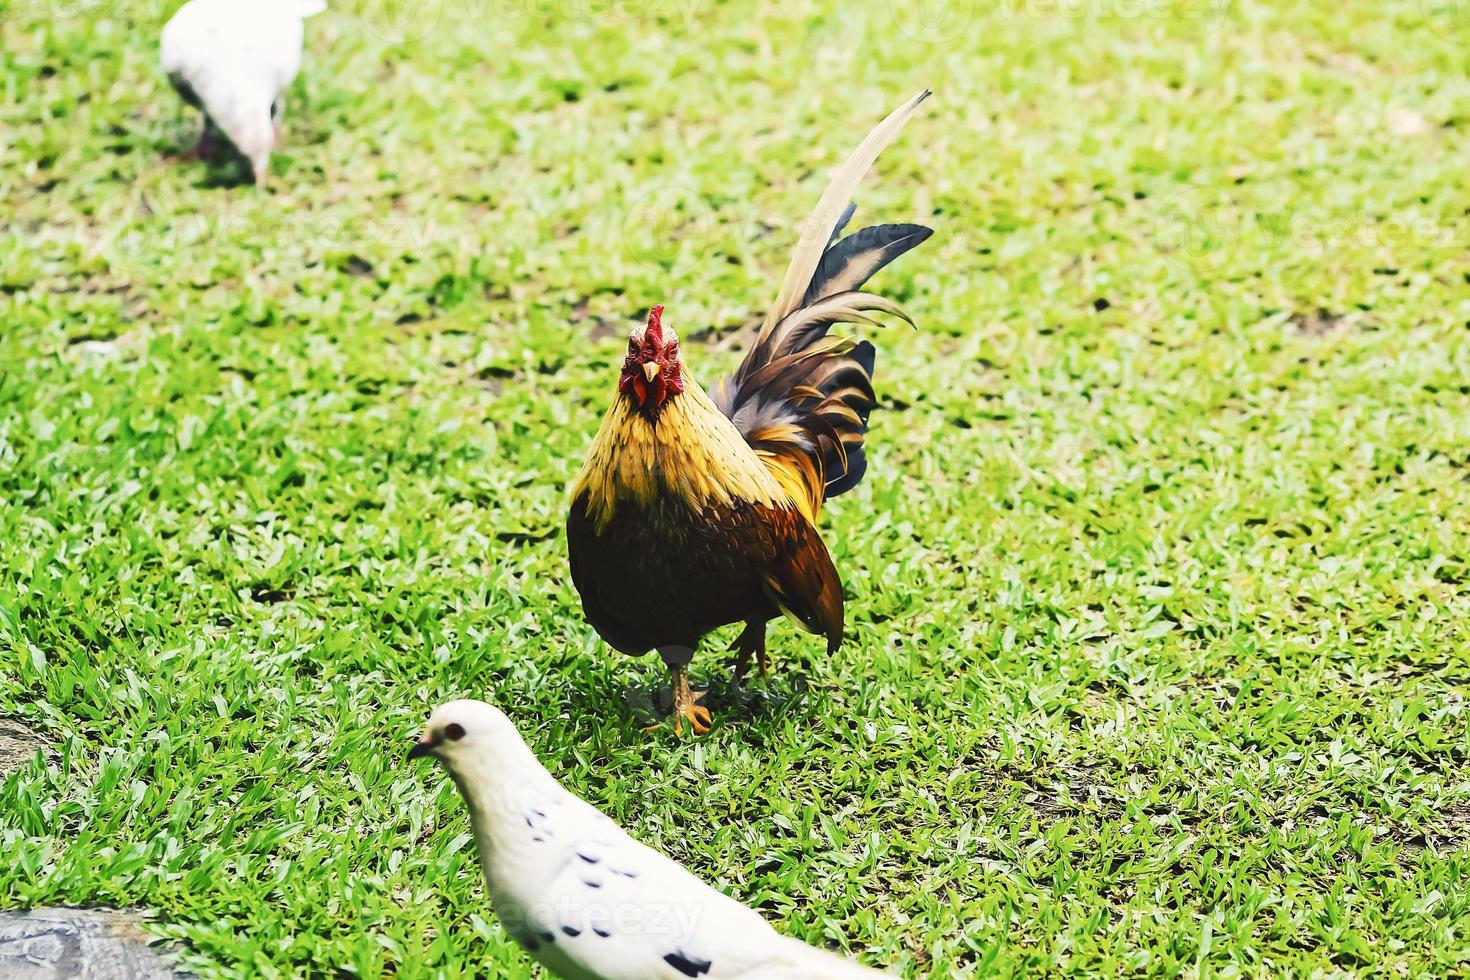 pollo bantam o ayam kate o ayam katai in lingua indonesiana, in cerca di cibo sul campo verde. foto